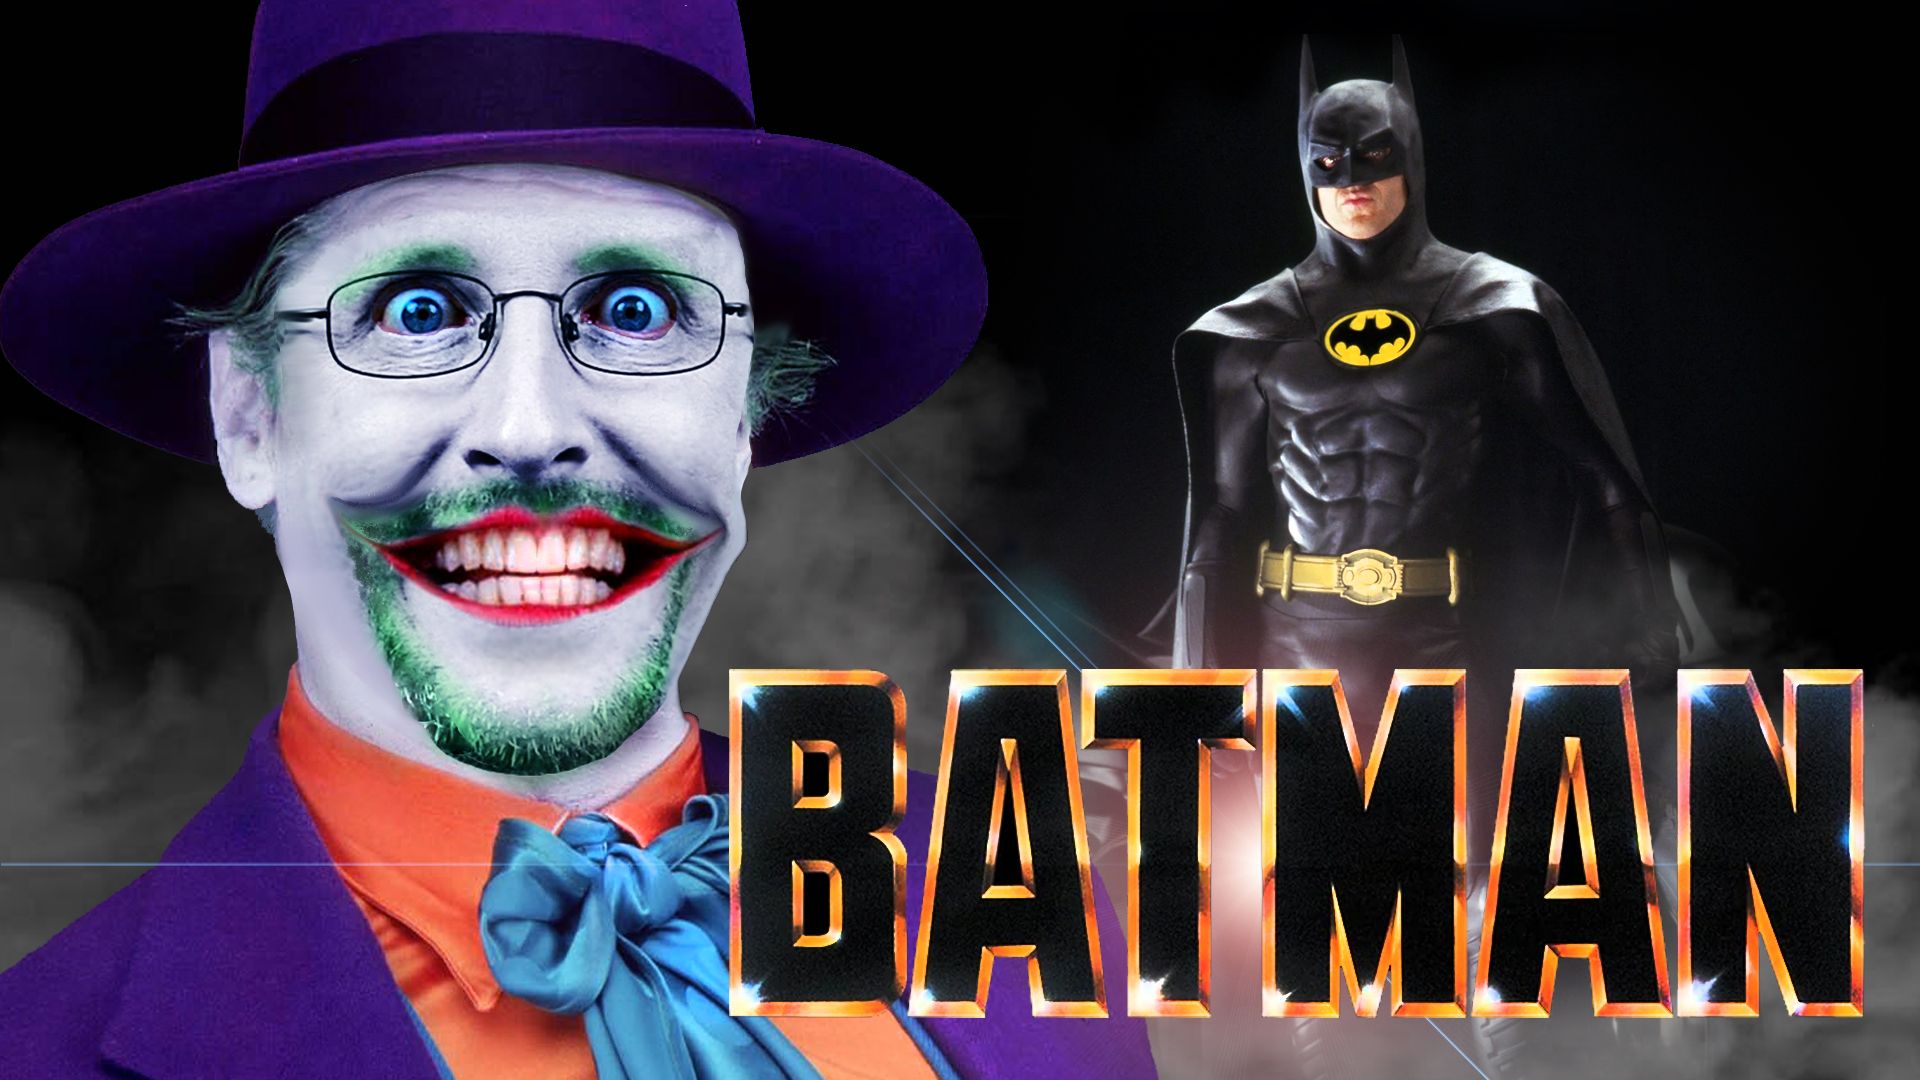 Michael Keaton's Batman inspired Mark Hamill to play Joker